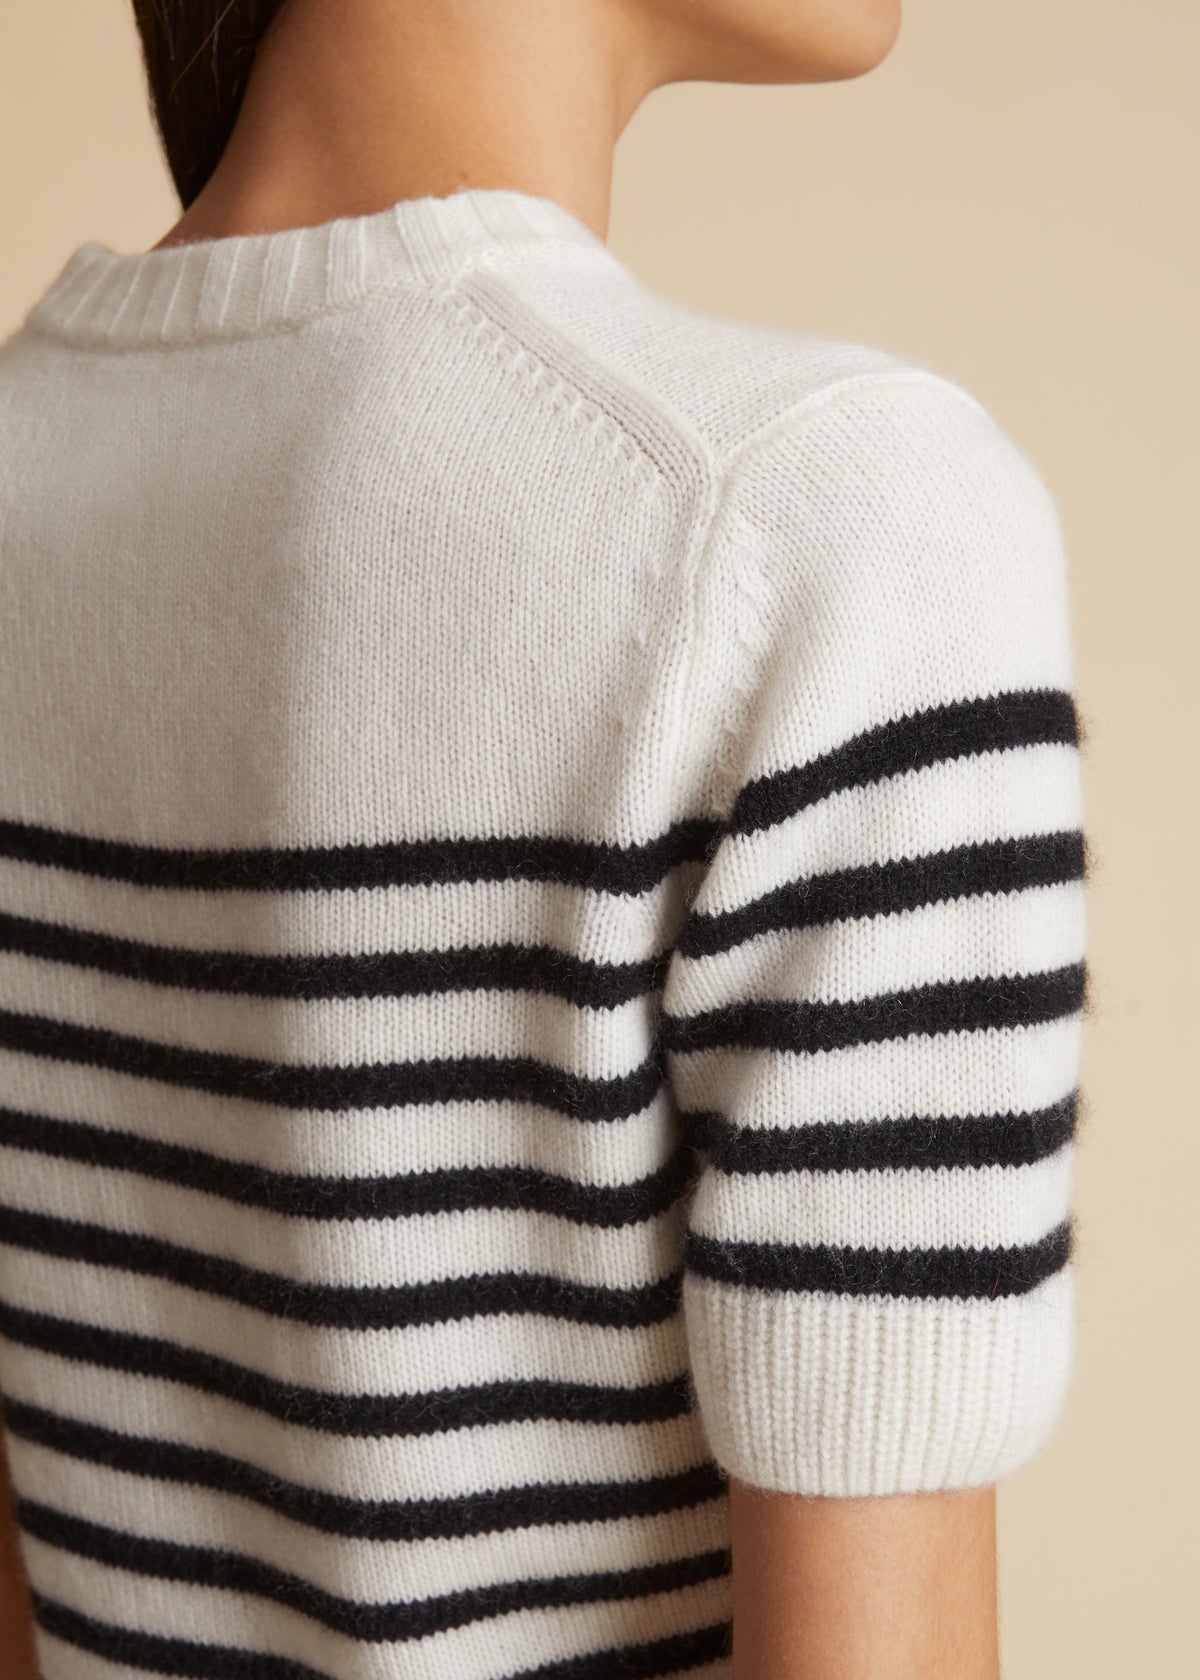 The Luphia Sweater in Glaze and Black Stripe - 5